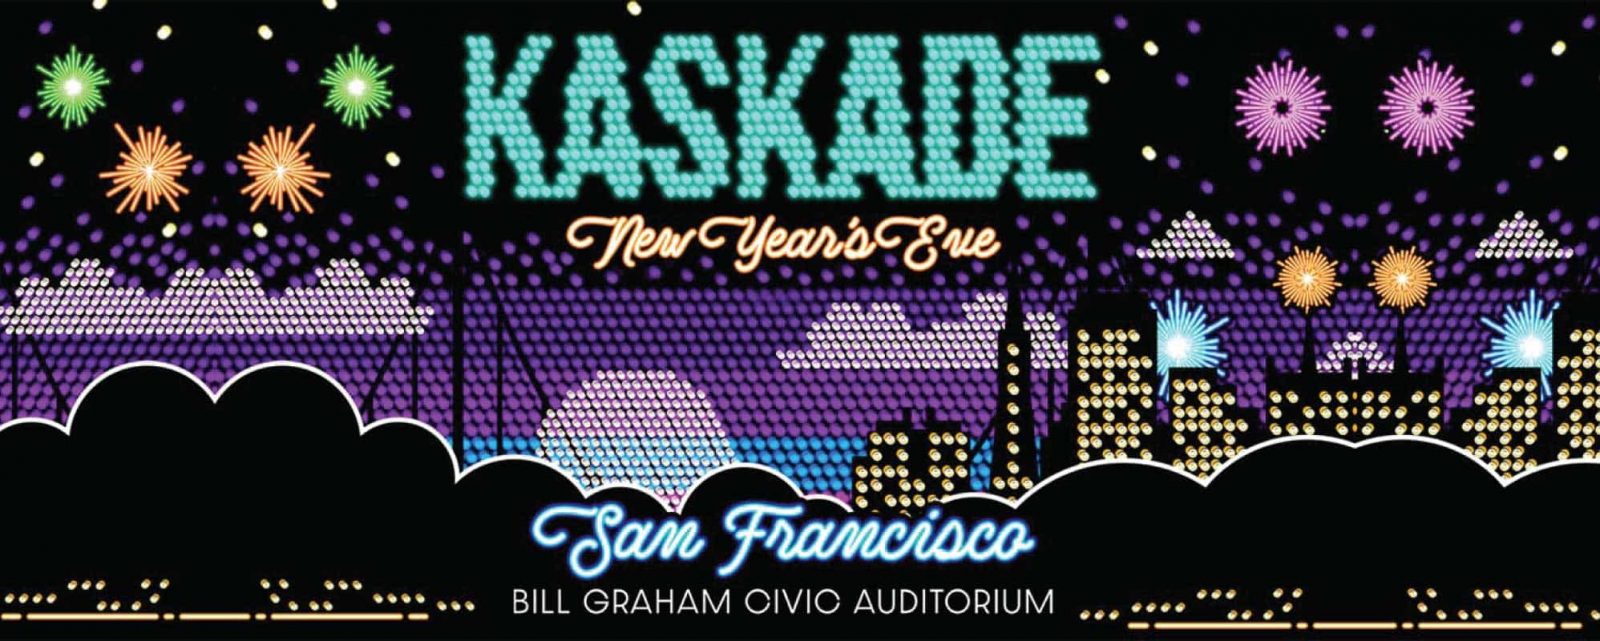 Kaskade New Year's Eve San Francisco at Bill Graham Civic Auditorium